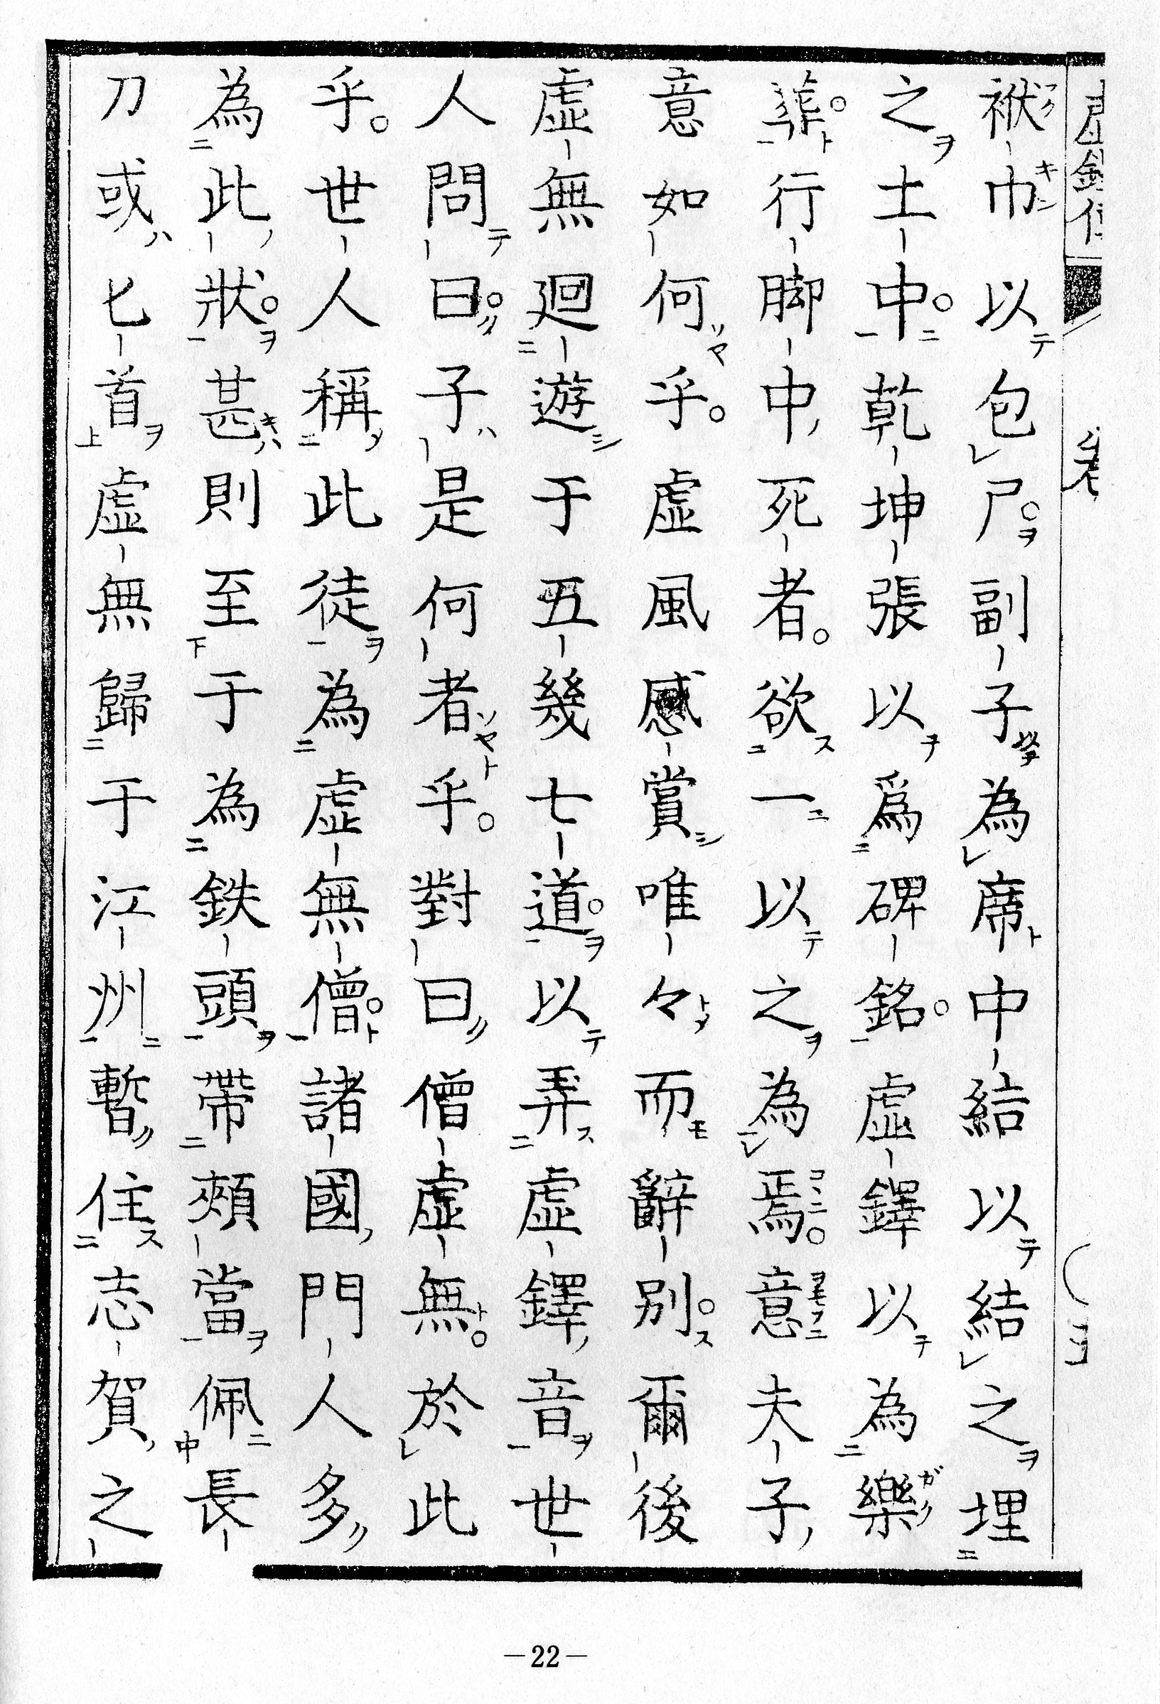 Kyotaku denki 1981 Edition page 22